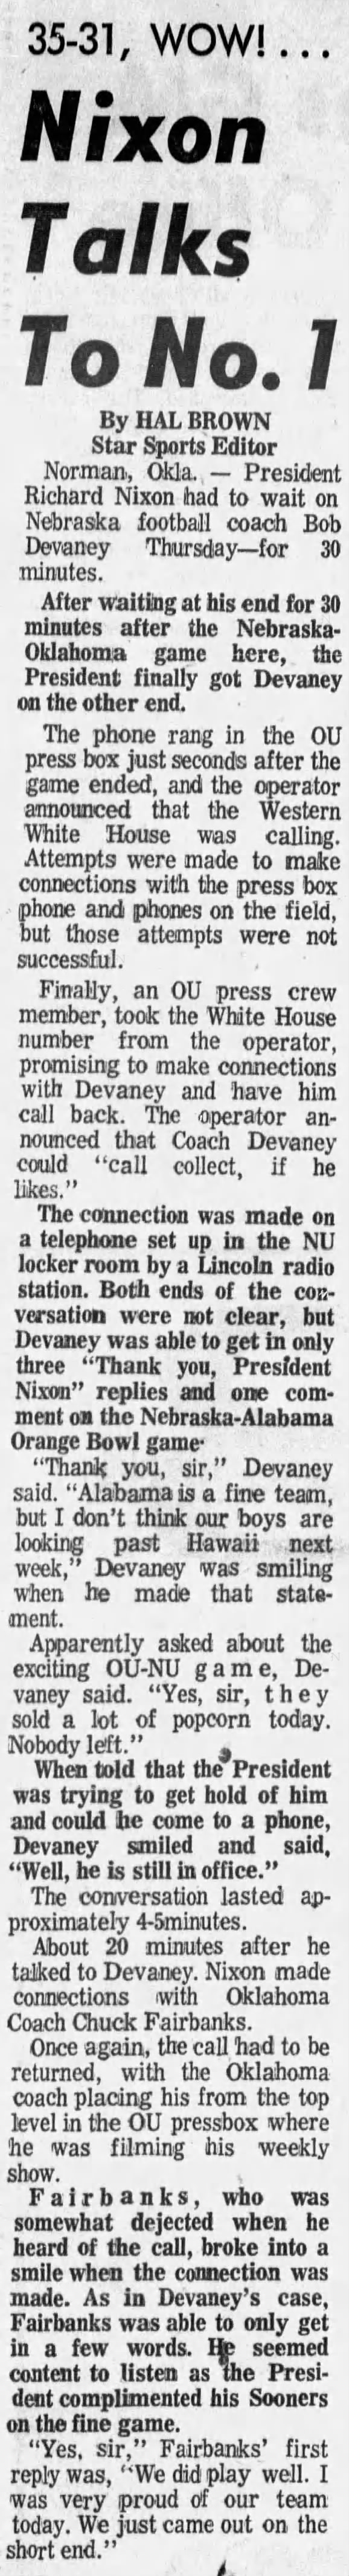 1971 Nebraska-Oklahoma call from Nixon